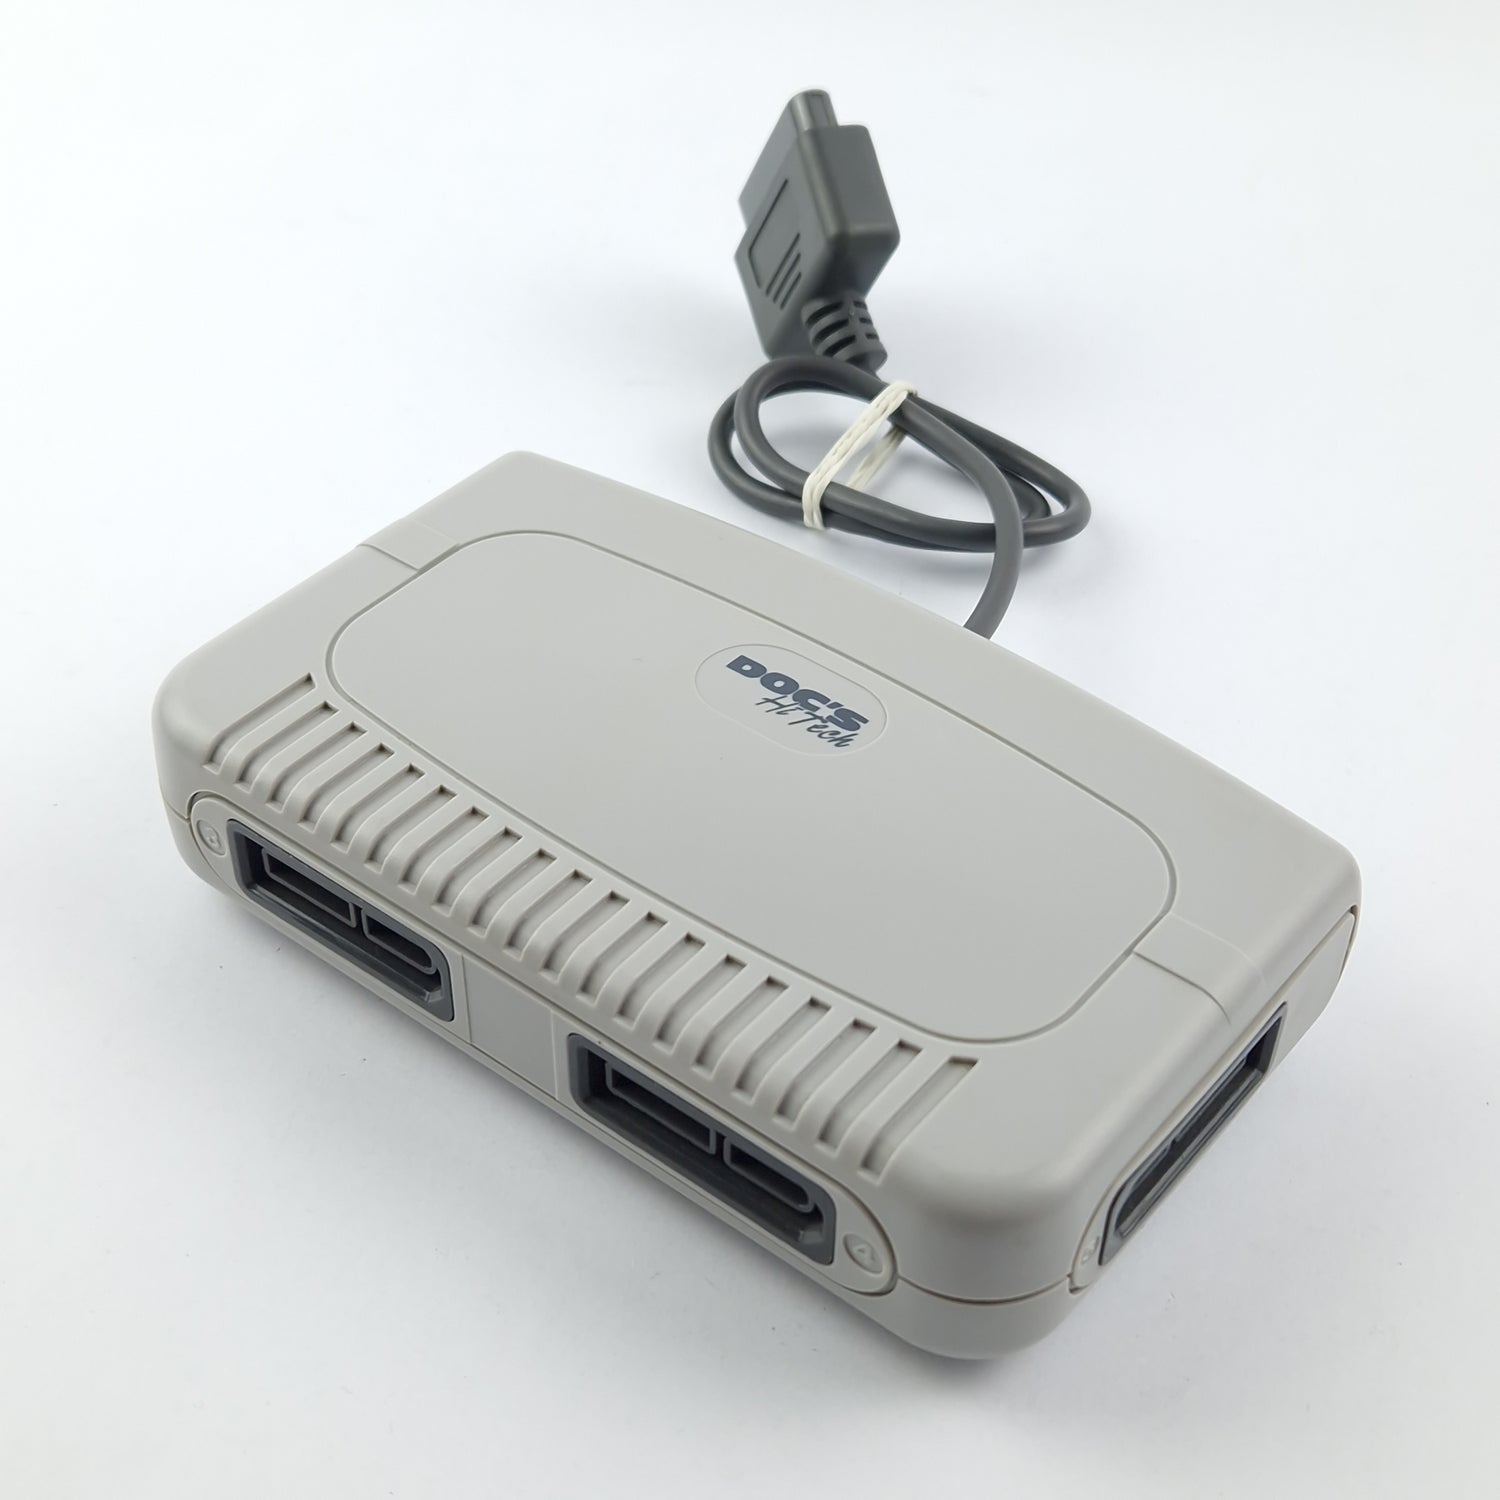 Super Nintendo Accessories: Doc's Hi Tech Tribal Tap / Multi Tap - 5 player SNES